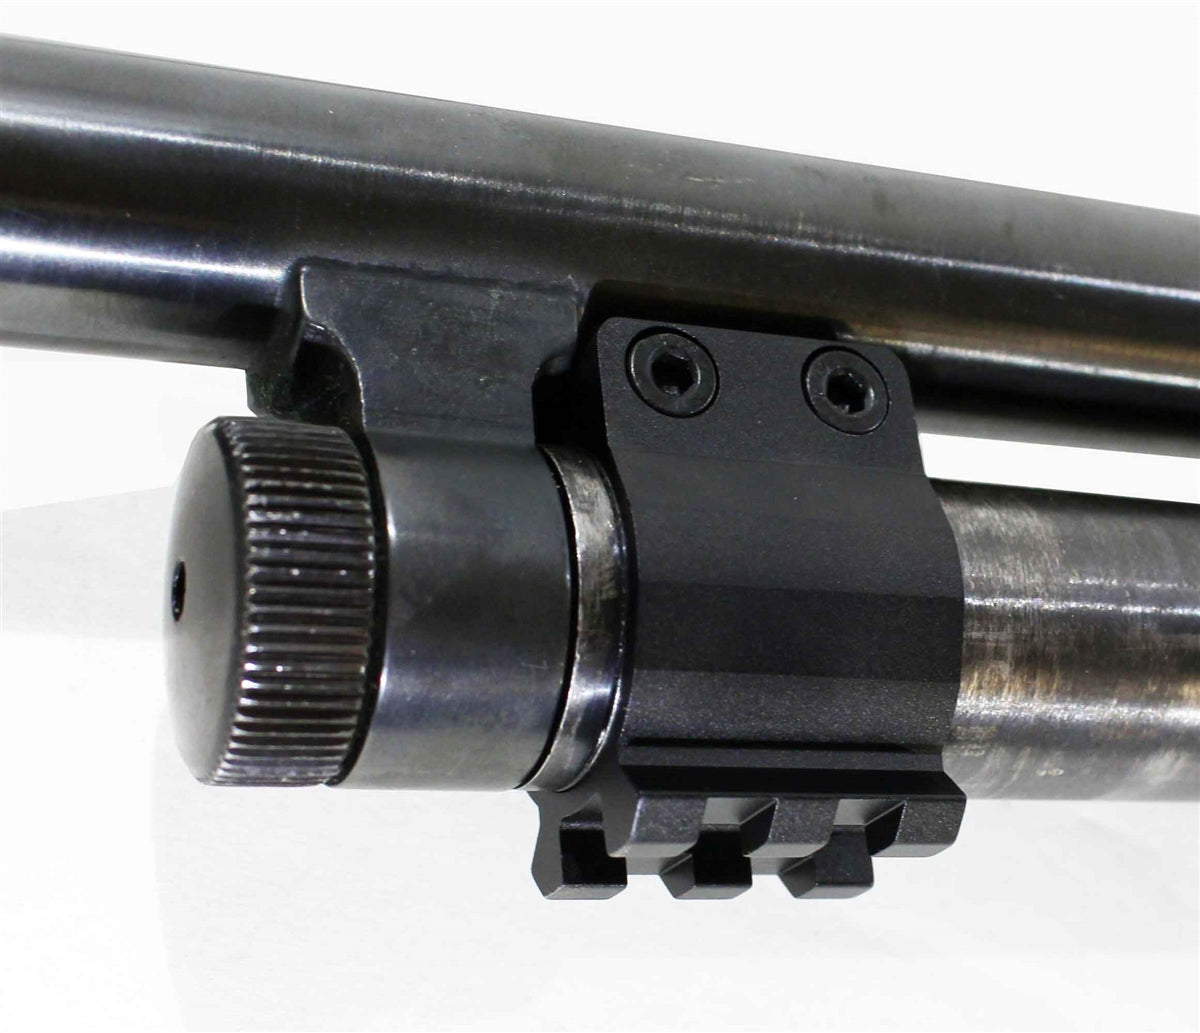 12 gauge remington rail adapter.